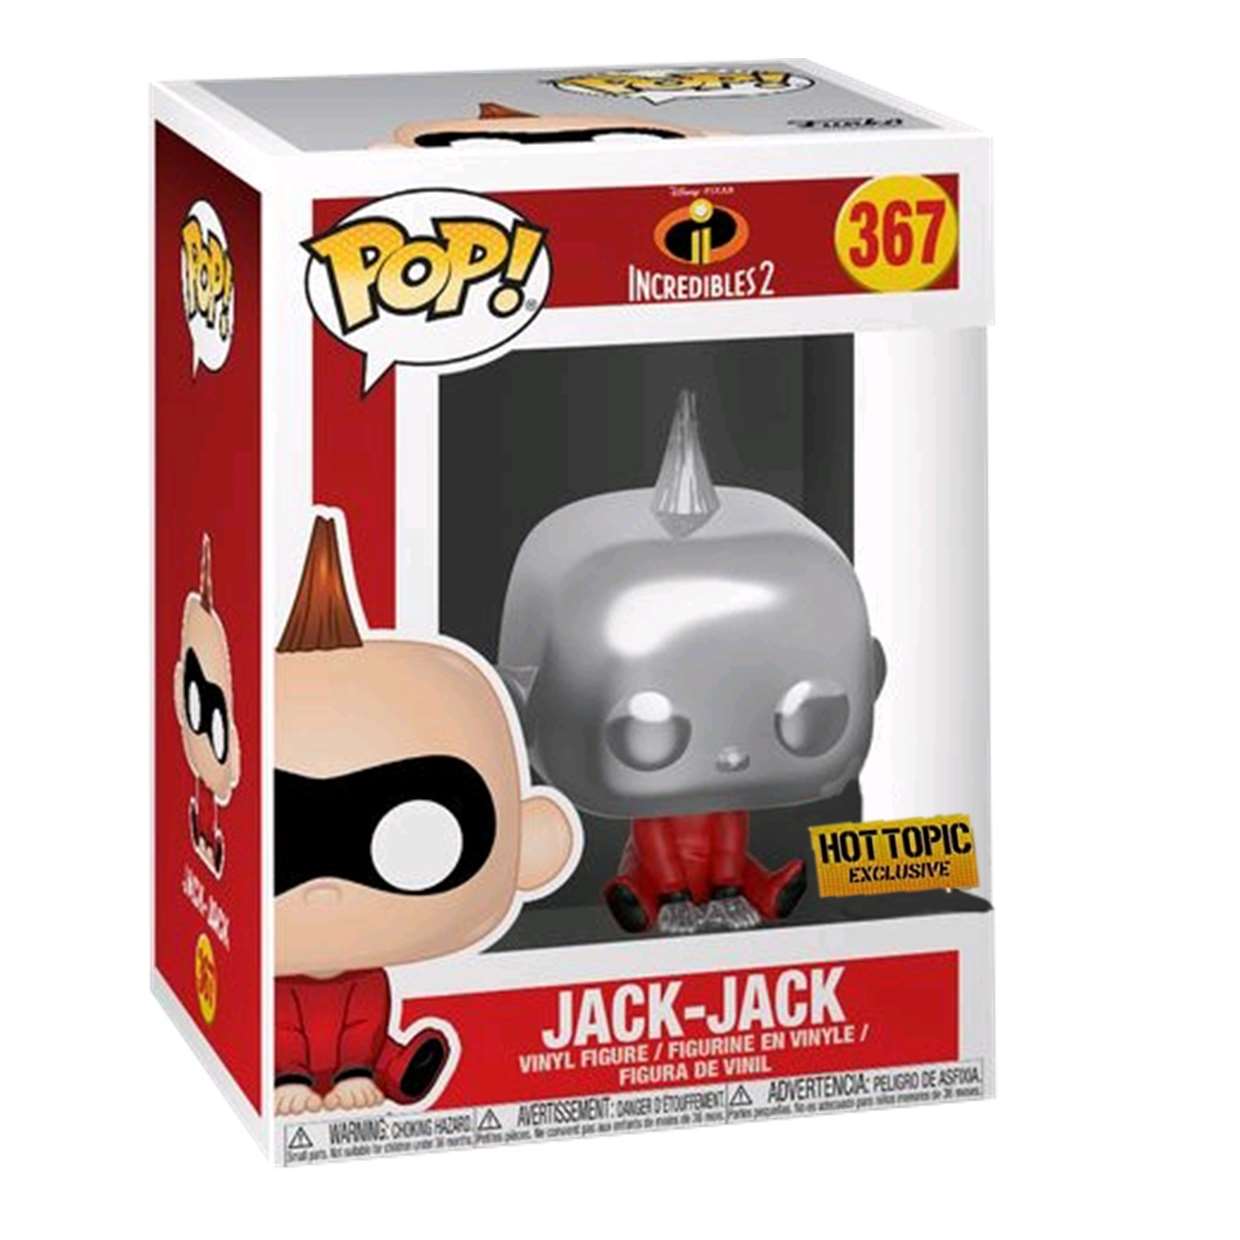 Jack Jack #367 Los Increíbles 2 Funko Pop! Hot Topic Chrome